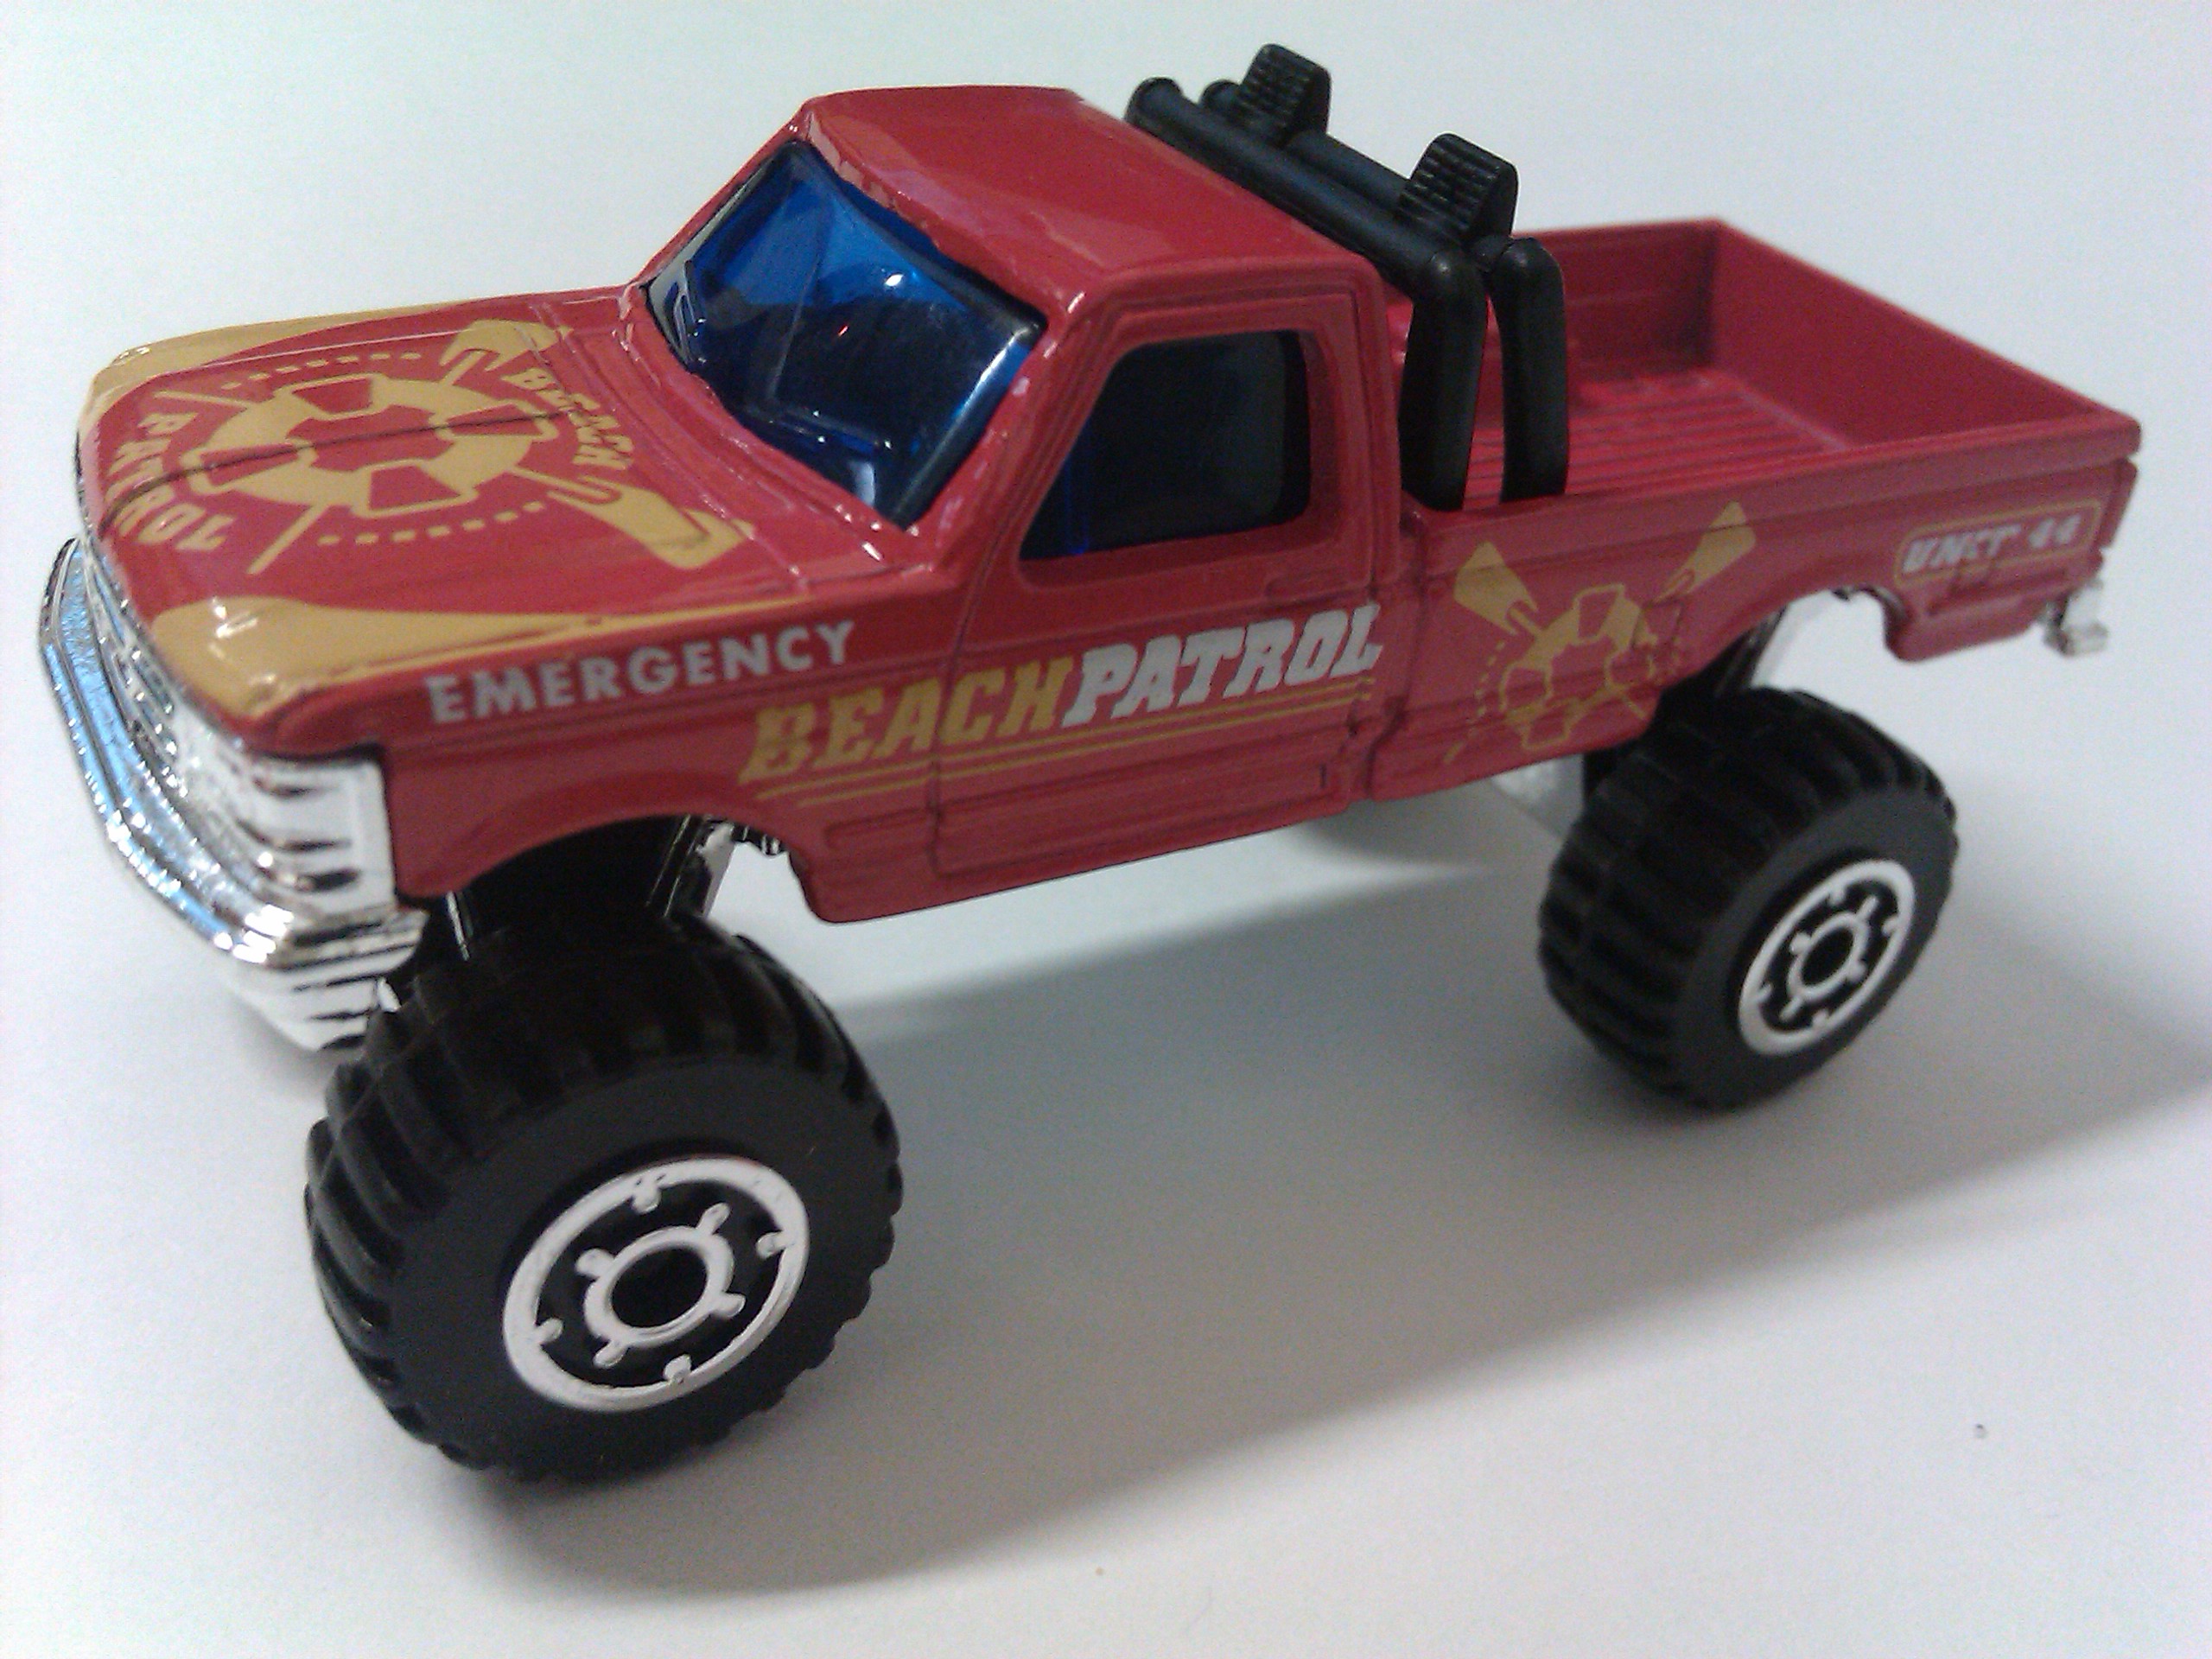 ford f150 toy trucks matchbox